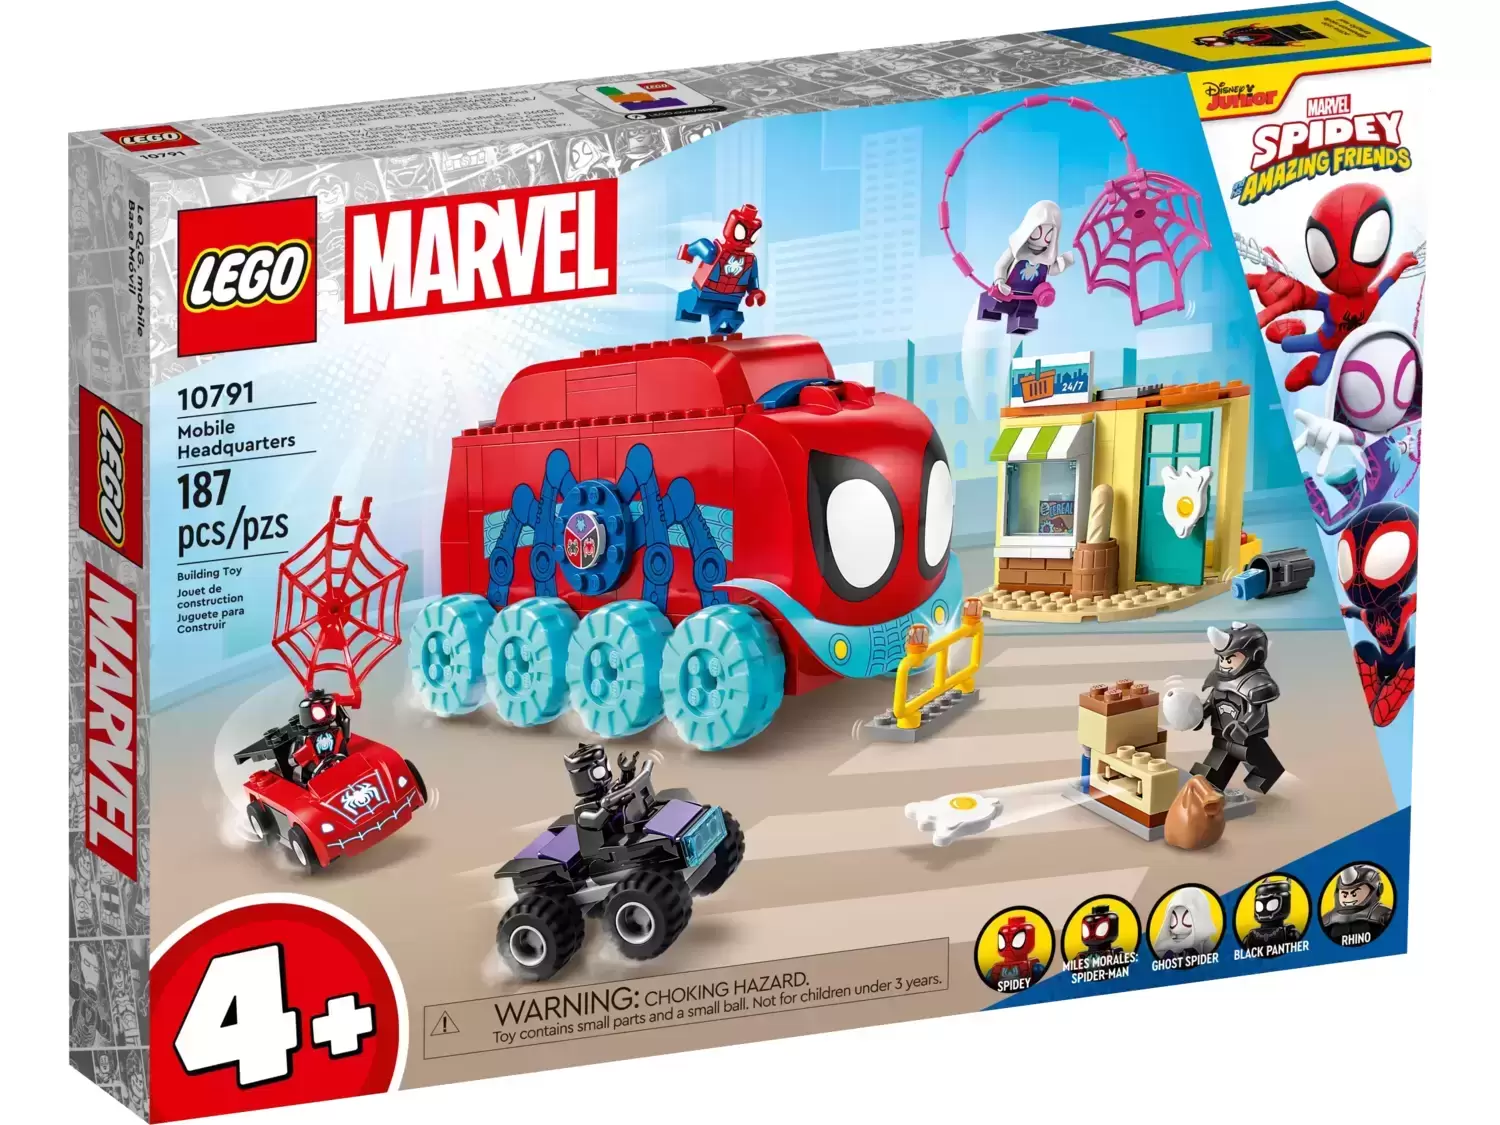 LEGO MARVEL Super Heroes - Mobile Headquarters